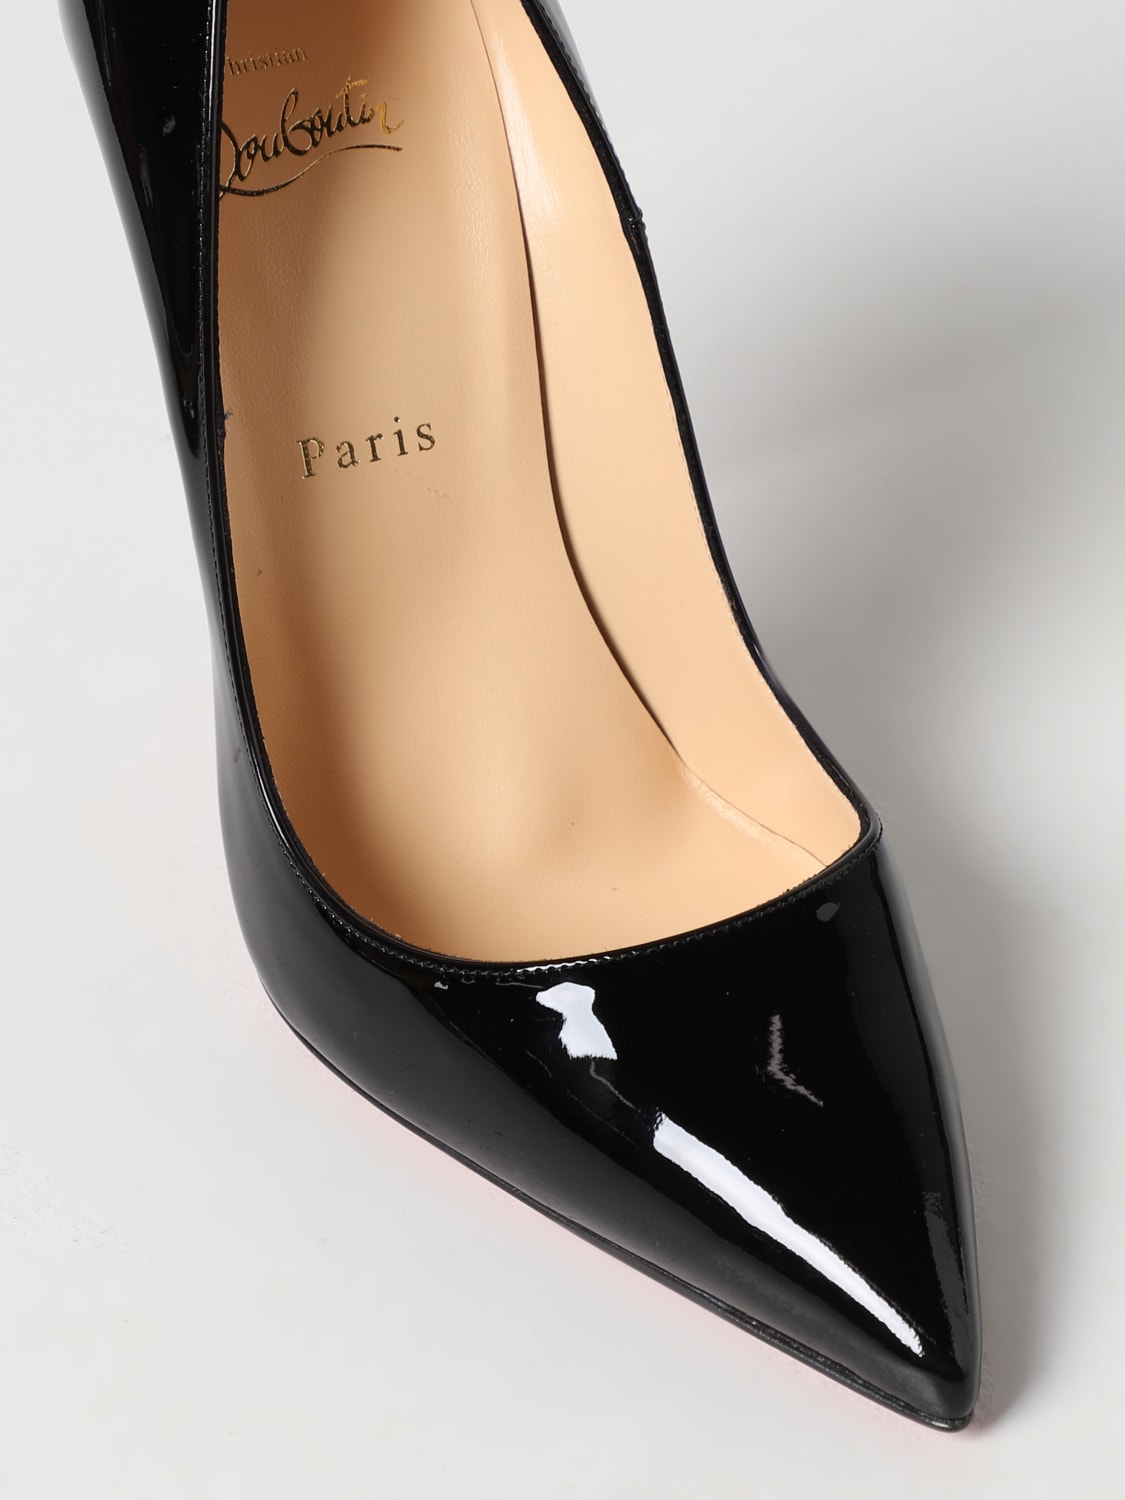 Louboutin So Kate's Black  Shoes heels classy, Louboutin heels